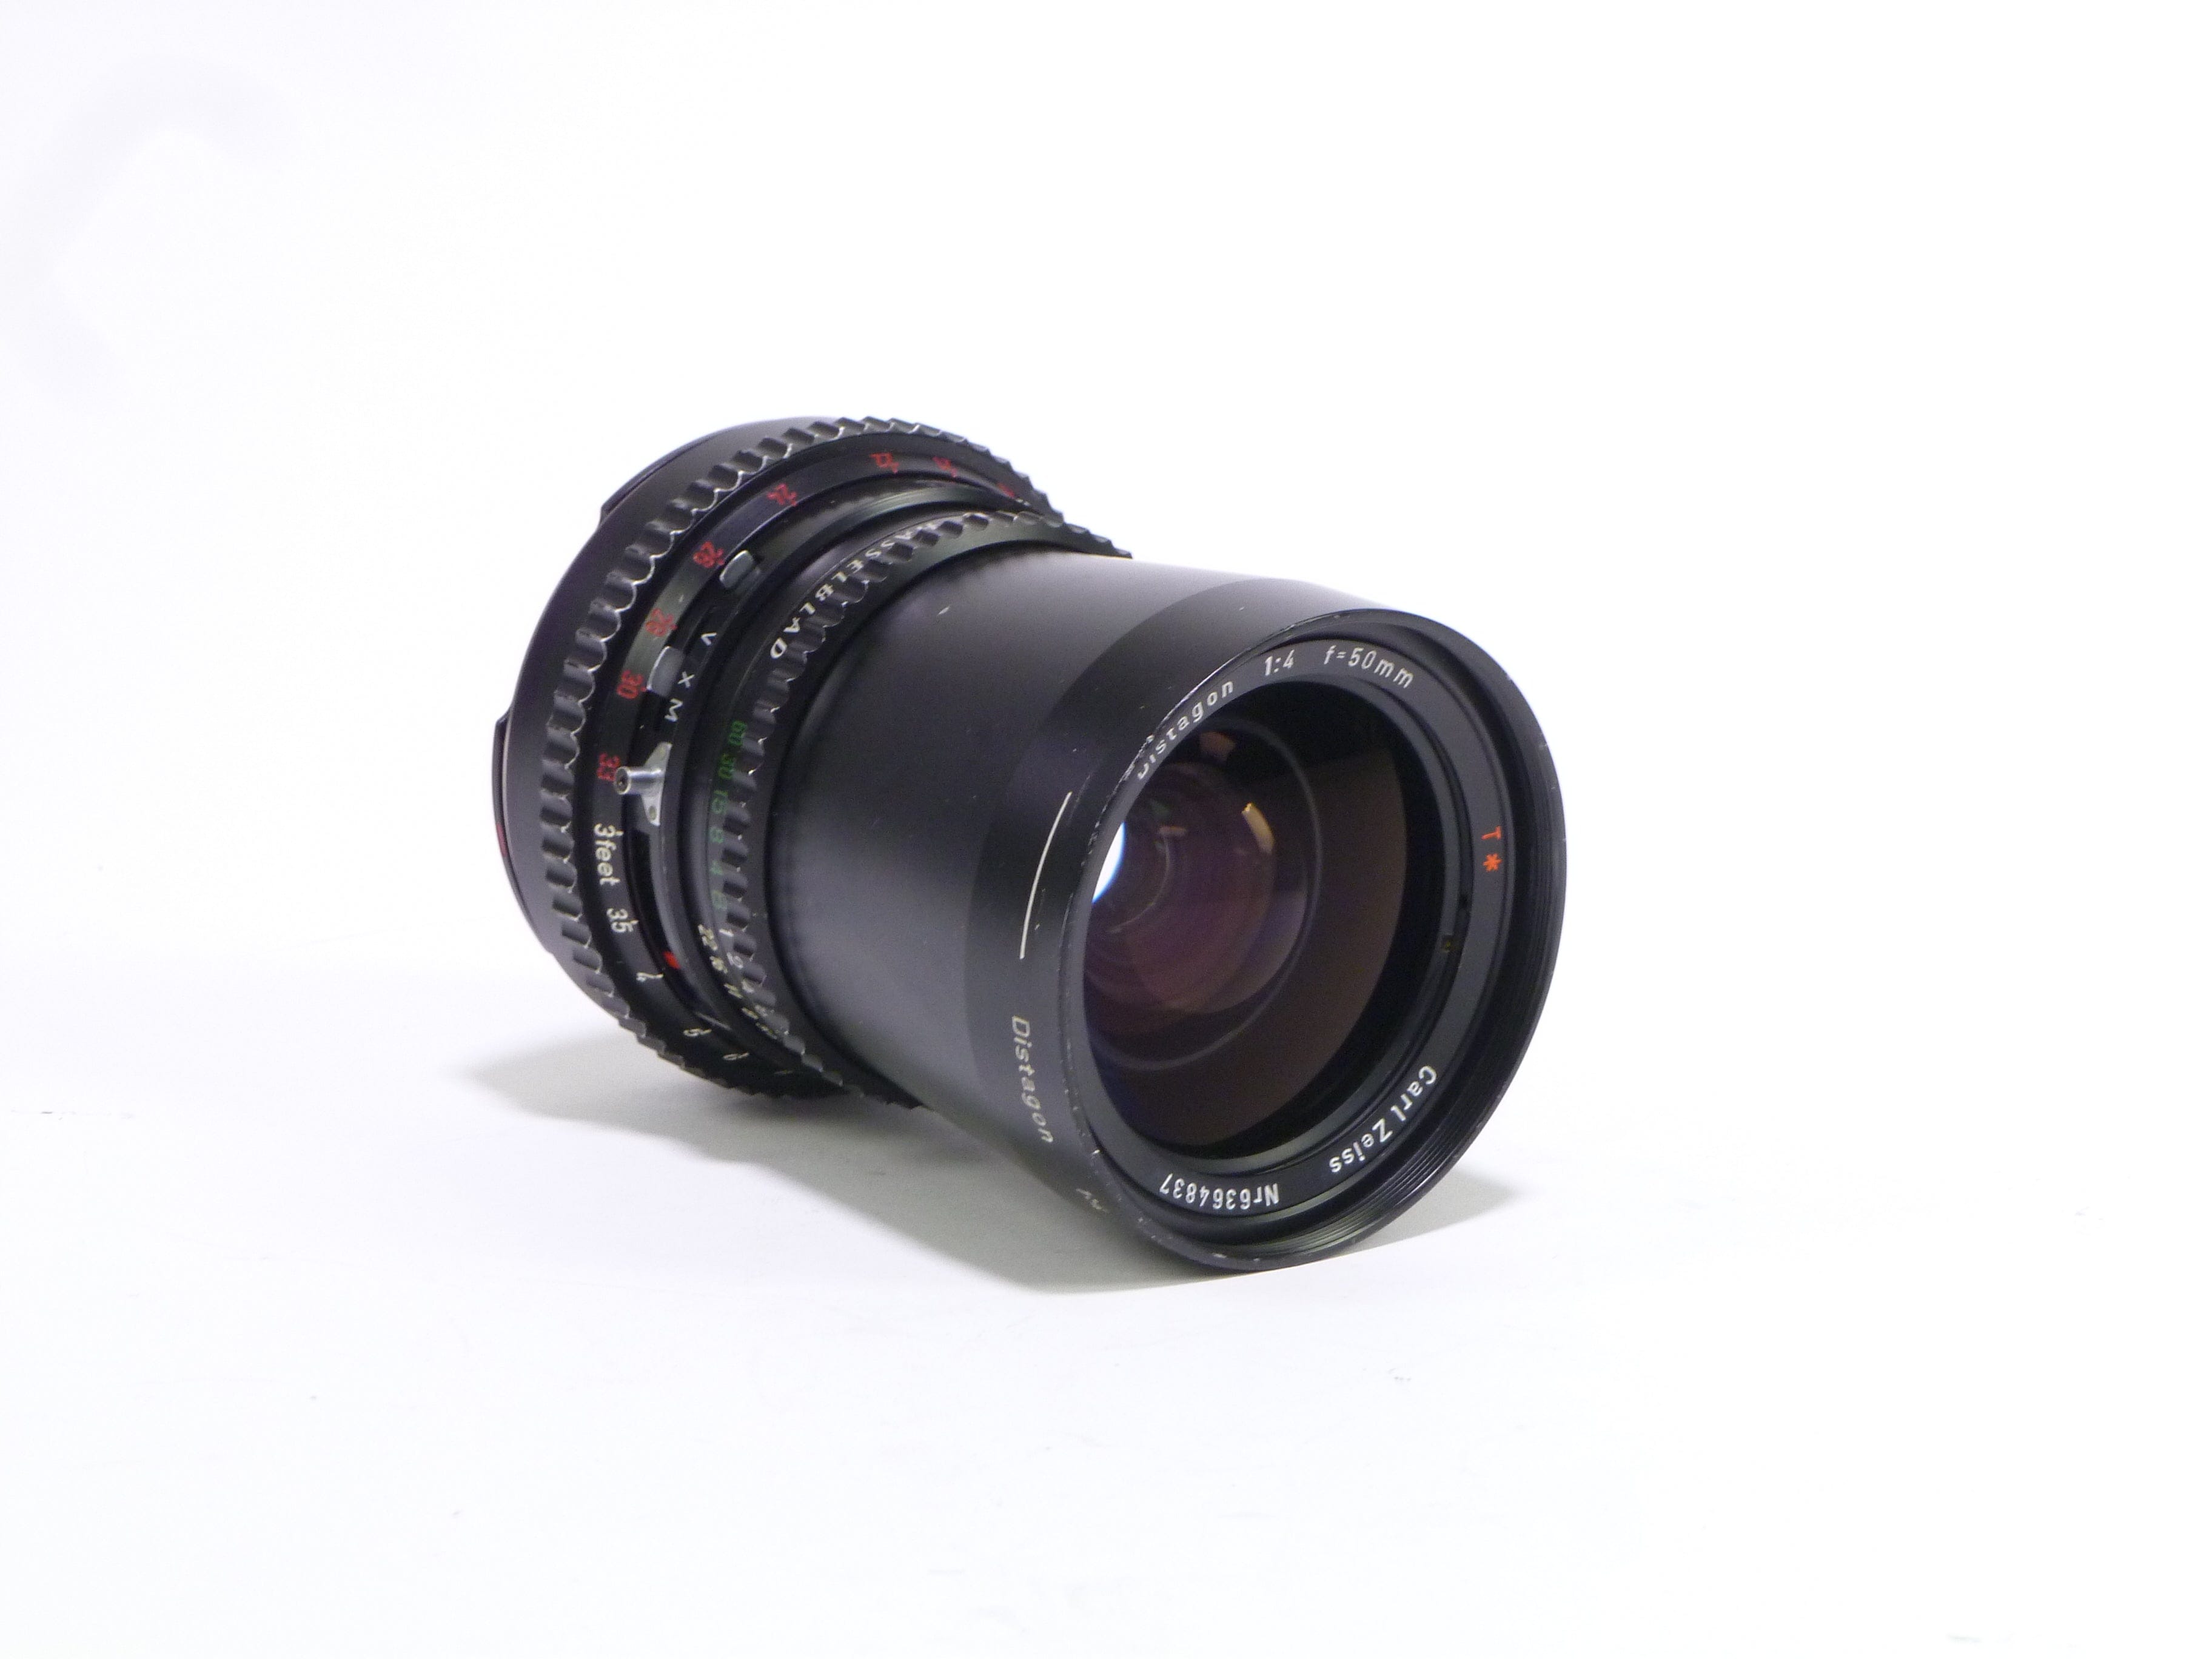 Carl Zeiss Distagon 50mm f/4 T* C Lens